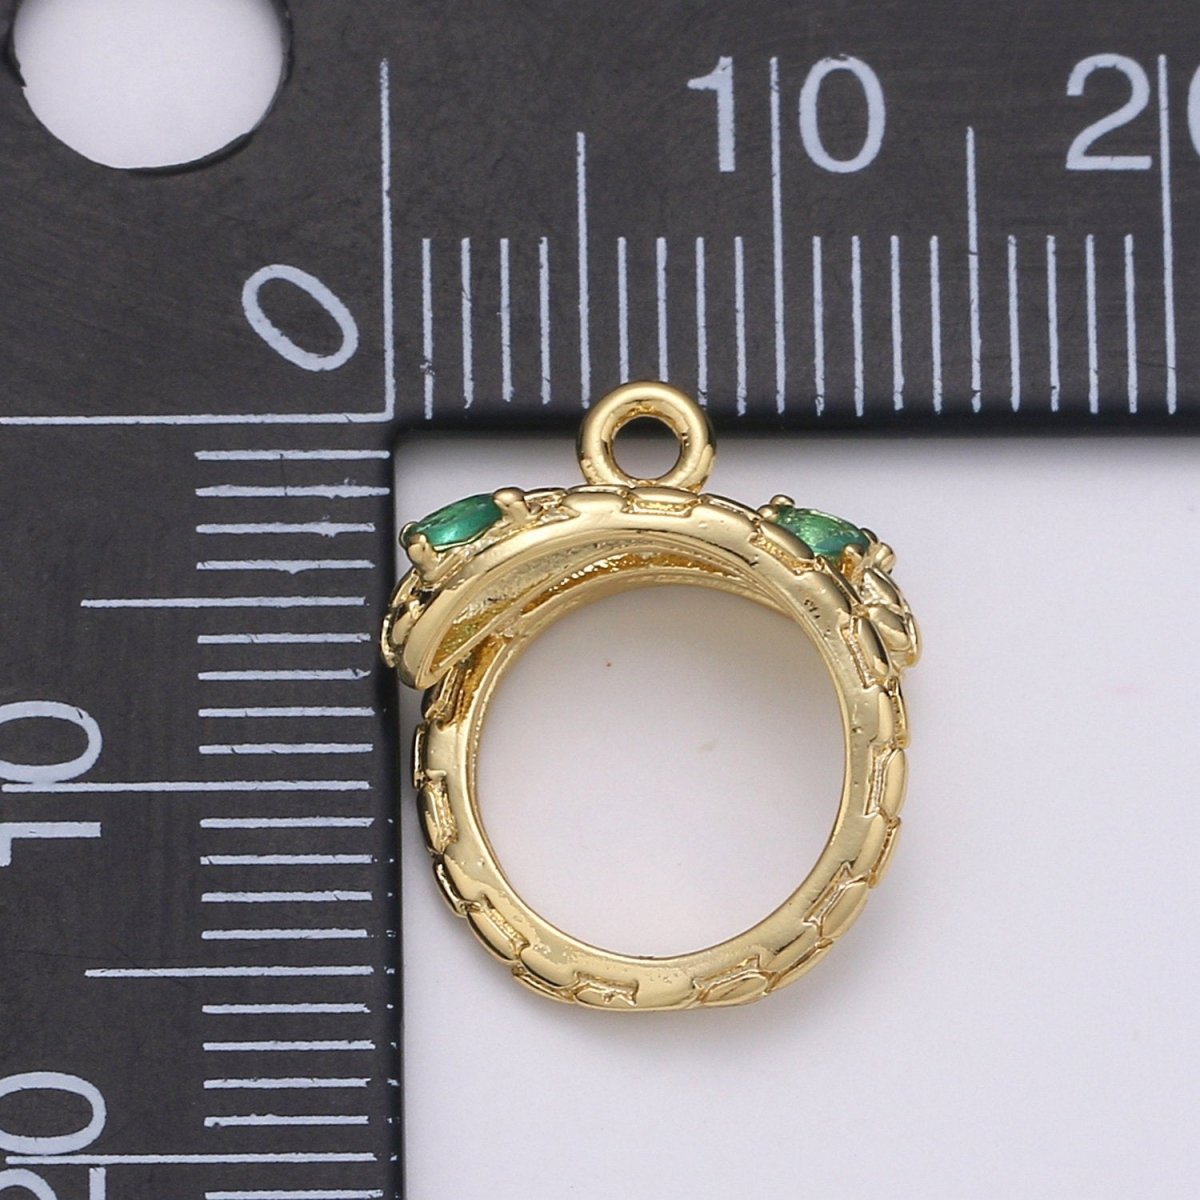 14K Gold Filled Serpent Pendant with Green CZ, Ancient Greek Mythology Pendant, Earing DIY, Snake Pendant, Green CZ C-429 - DLUXCA